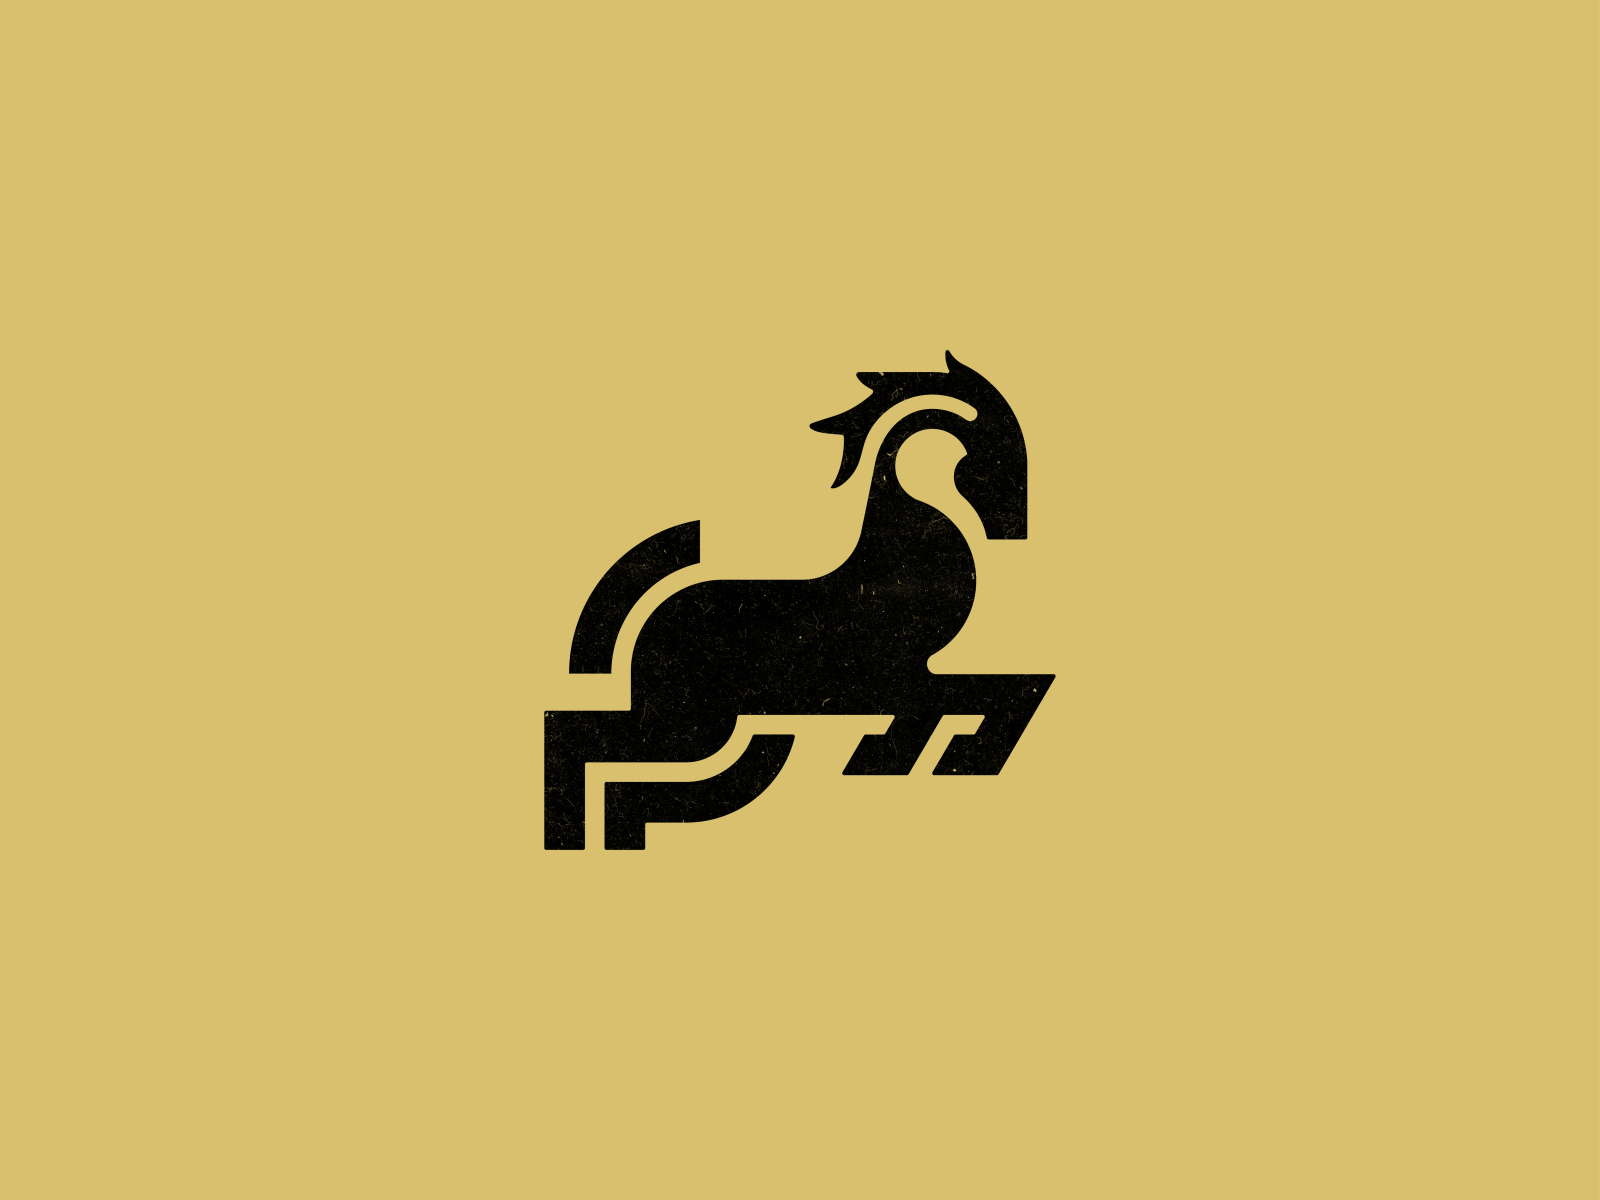 Mighty Horse by designbyhelios on Dribbble